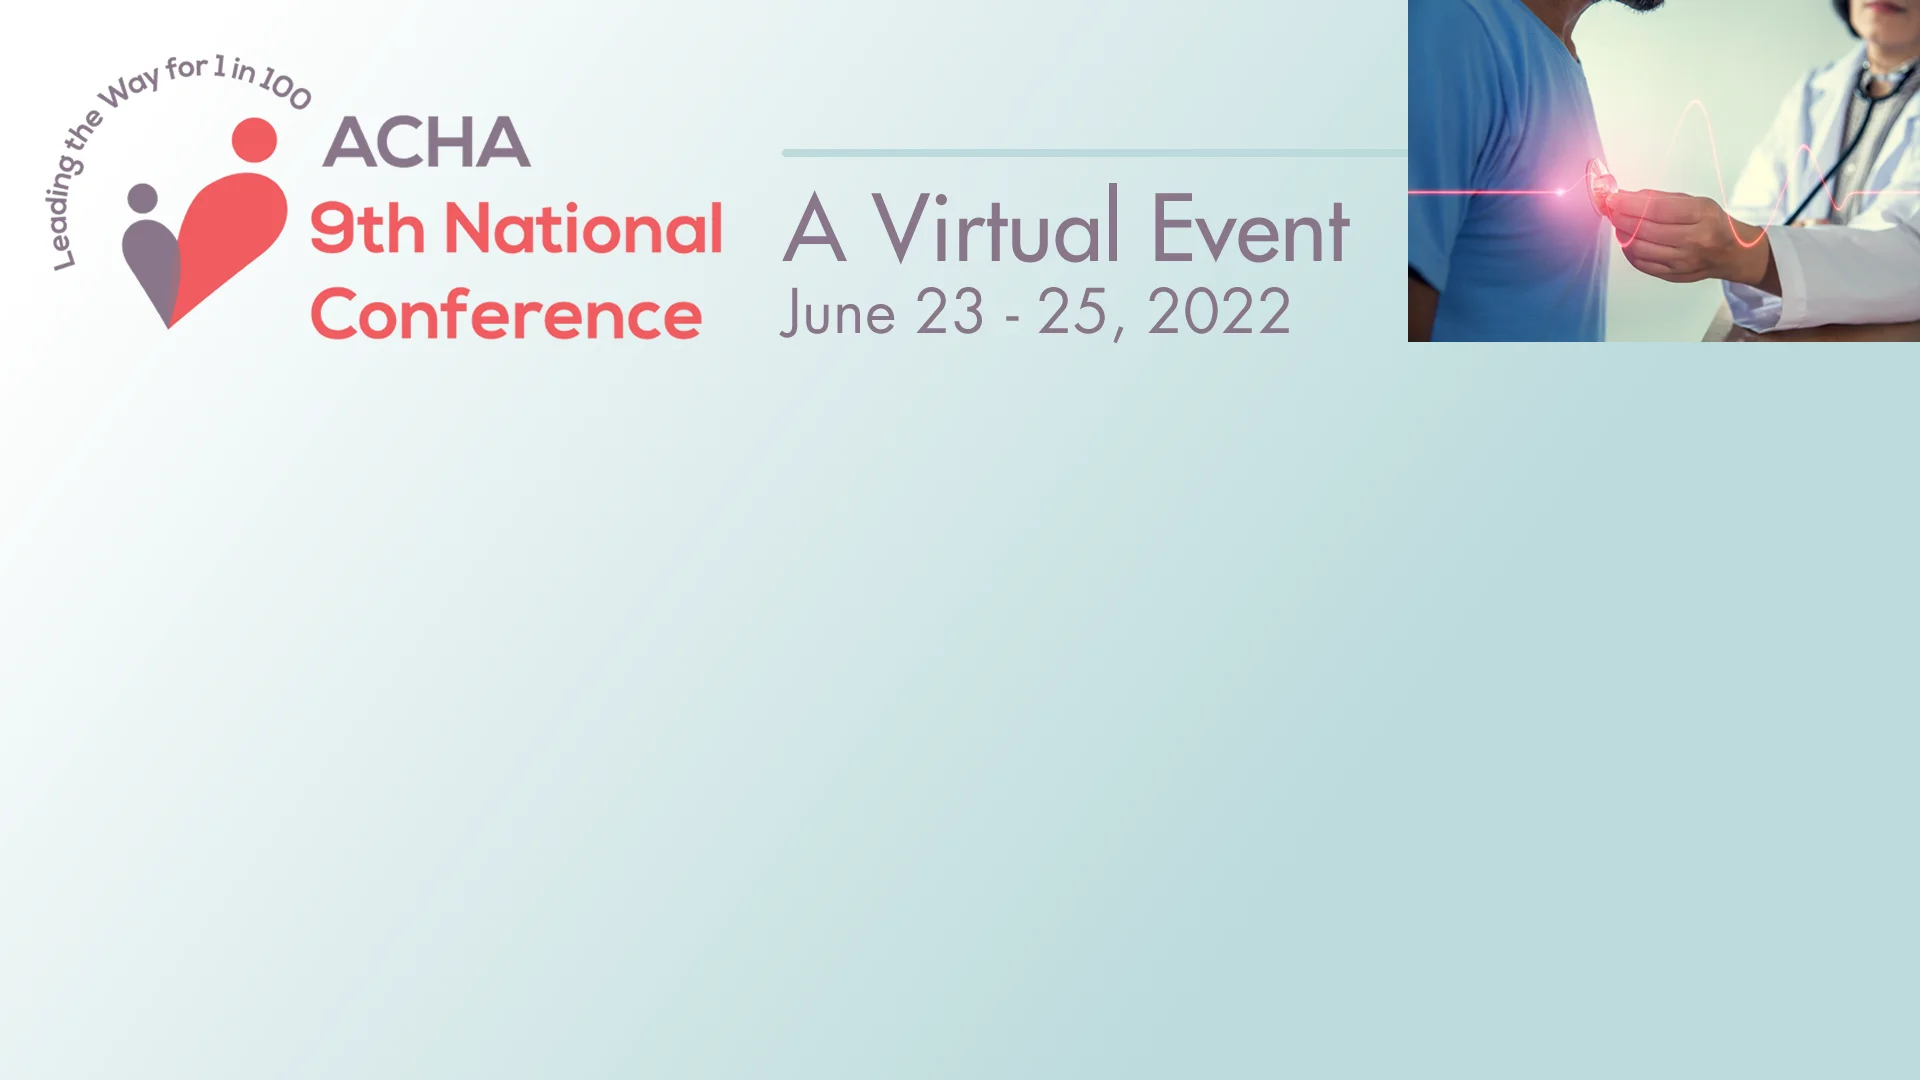 ACHA 9th Annual Conference on Vimeo